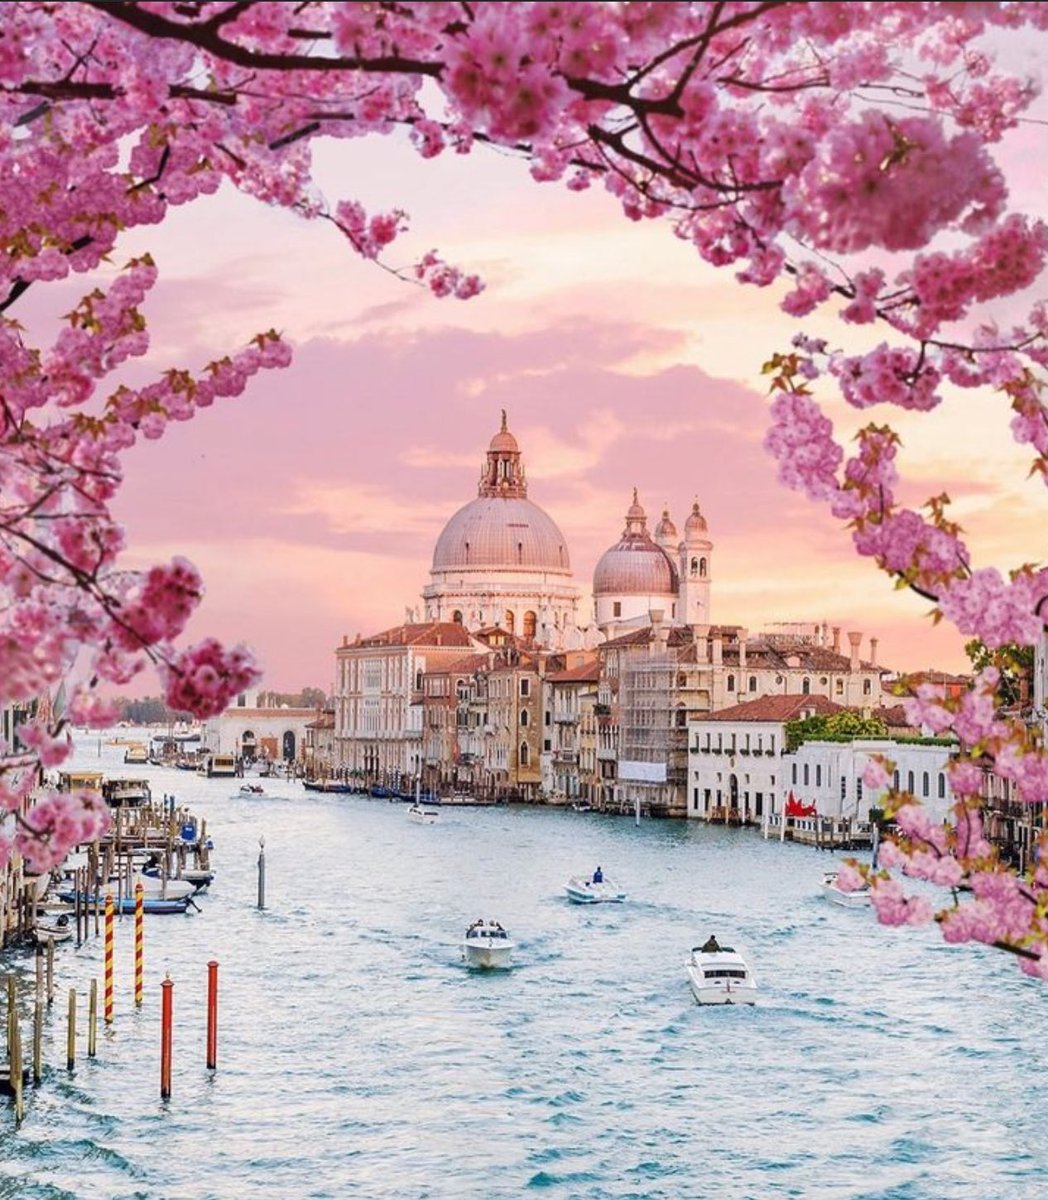 Awaken in bloom.

Venice, Italy